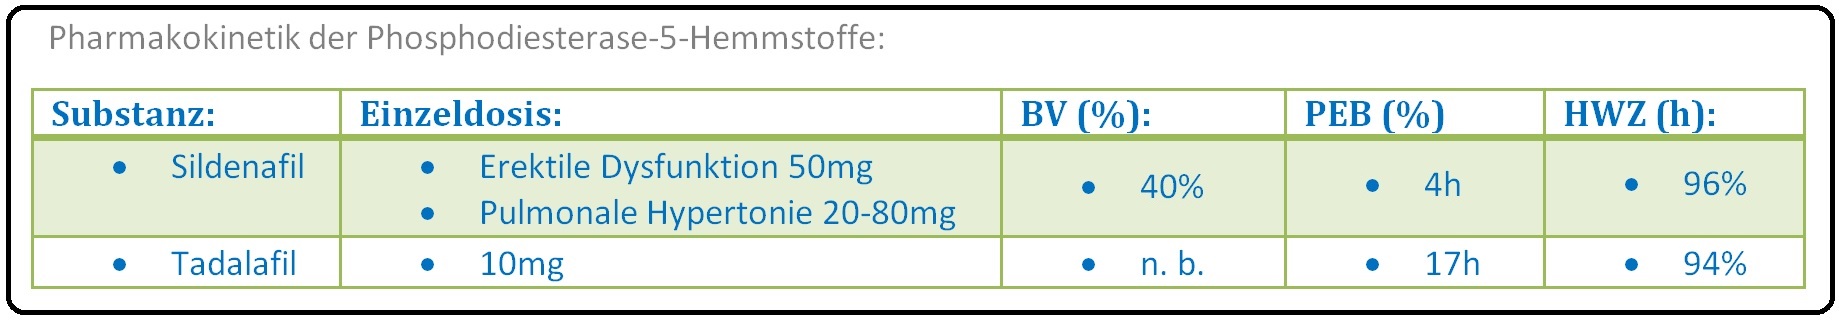 55 Pharmakokinetik der Phosphodiesterase 5 Hemmer